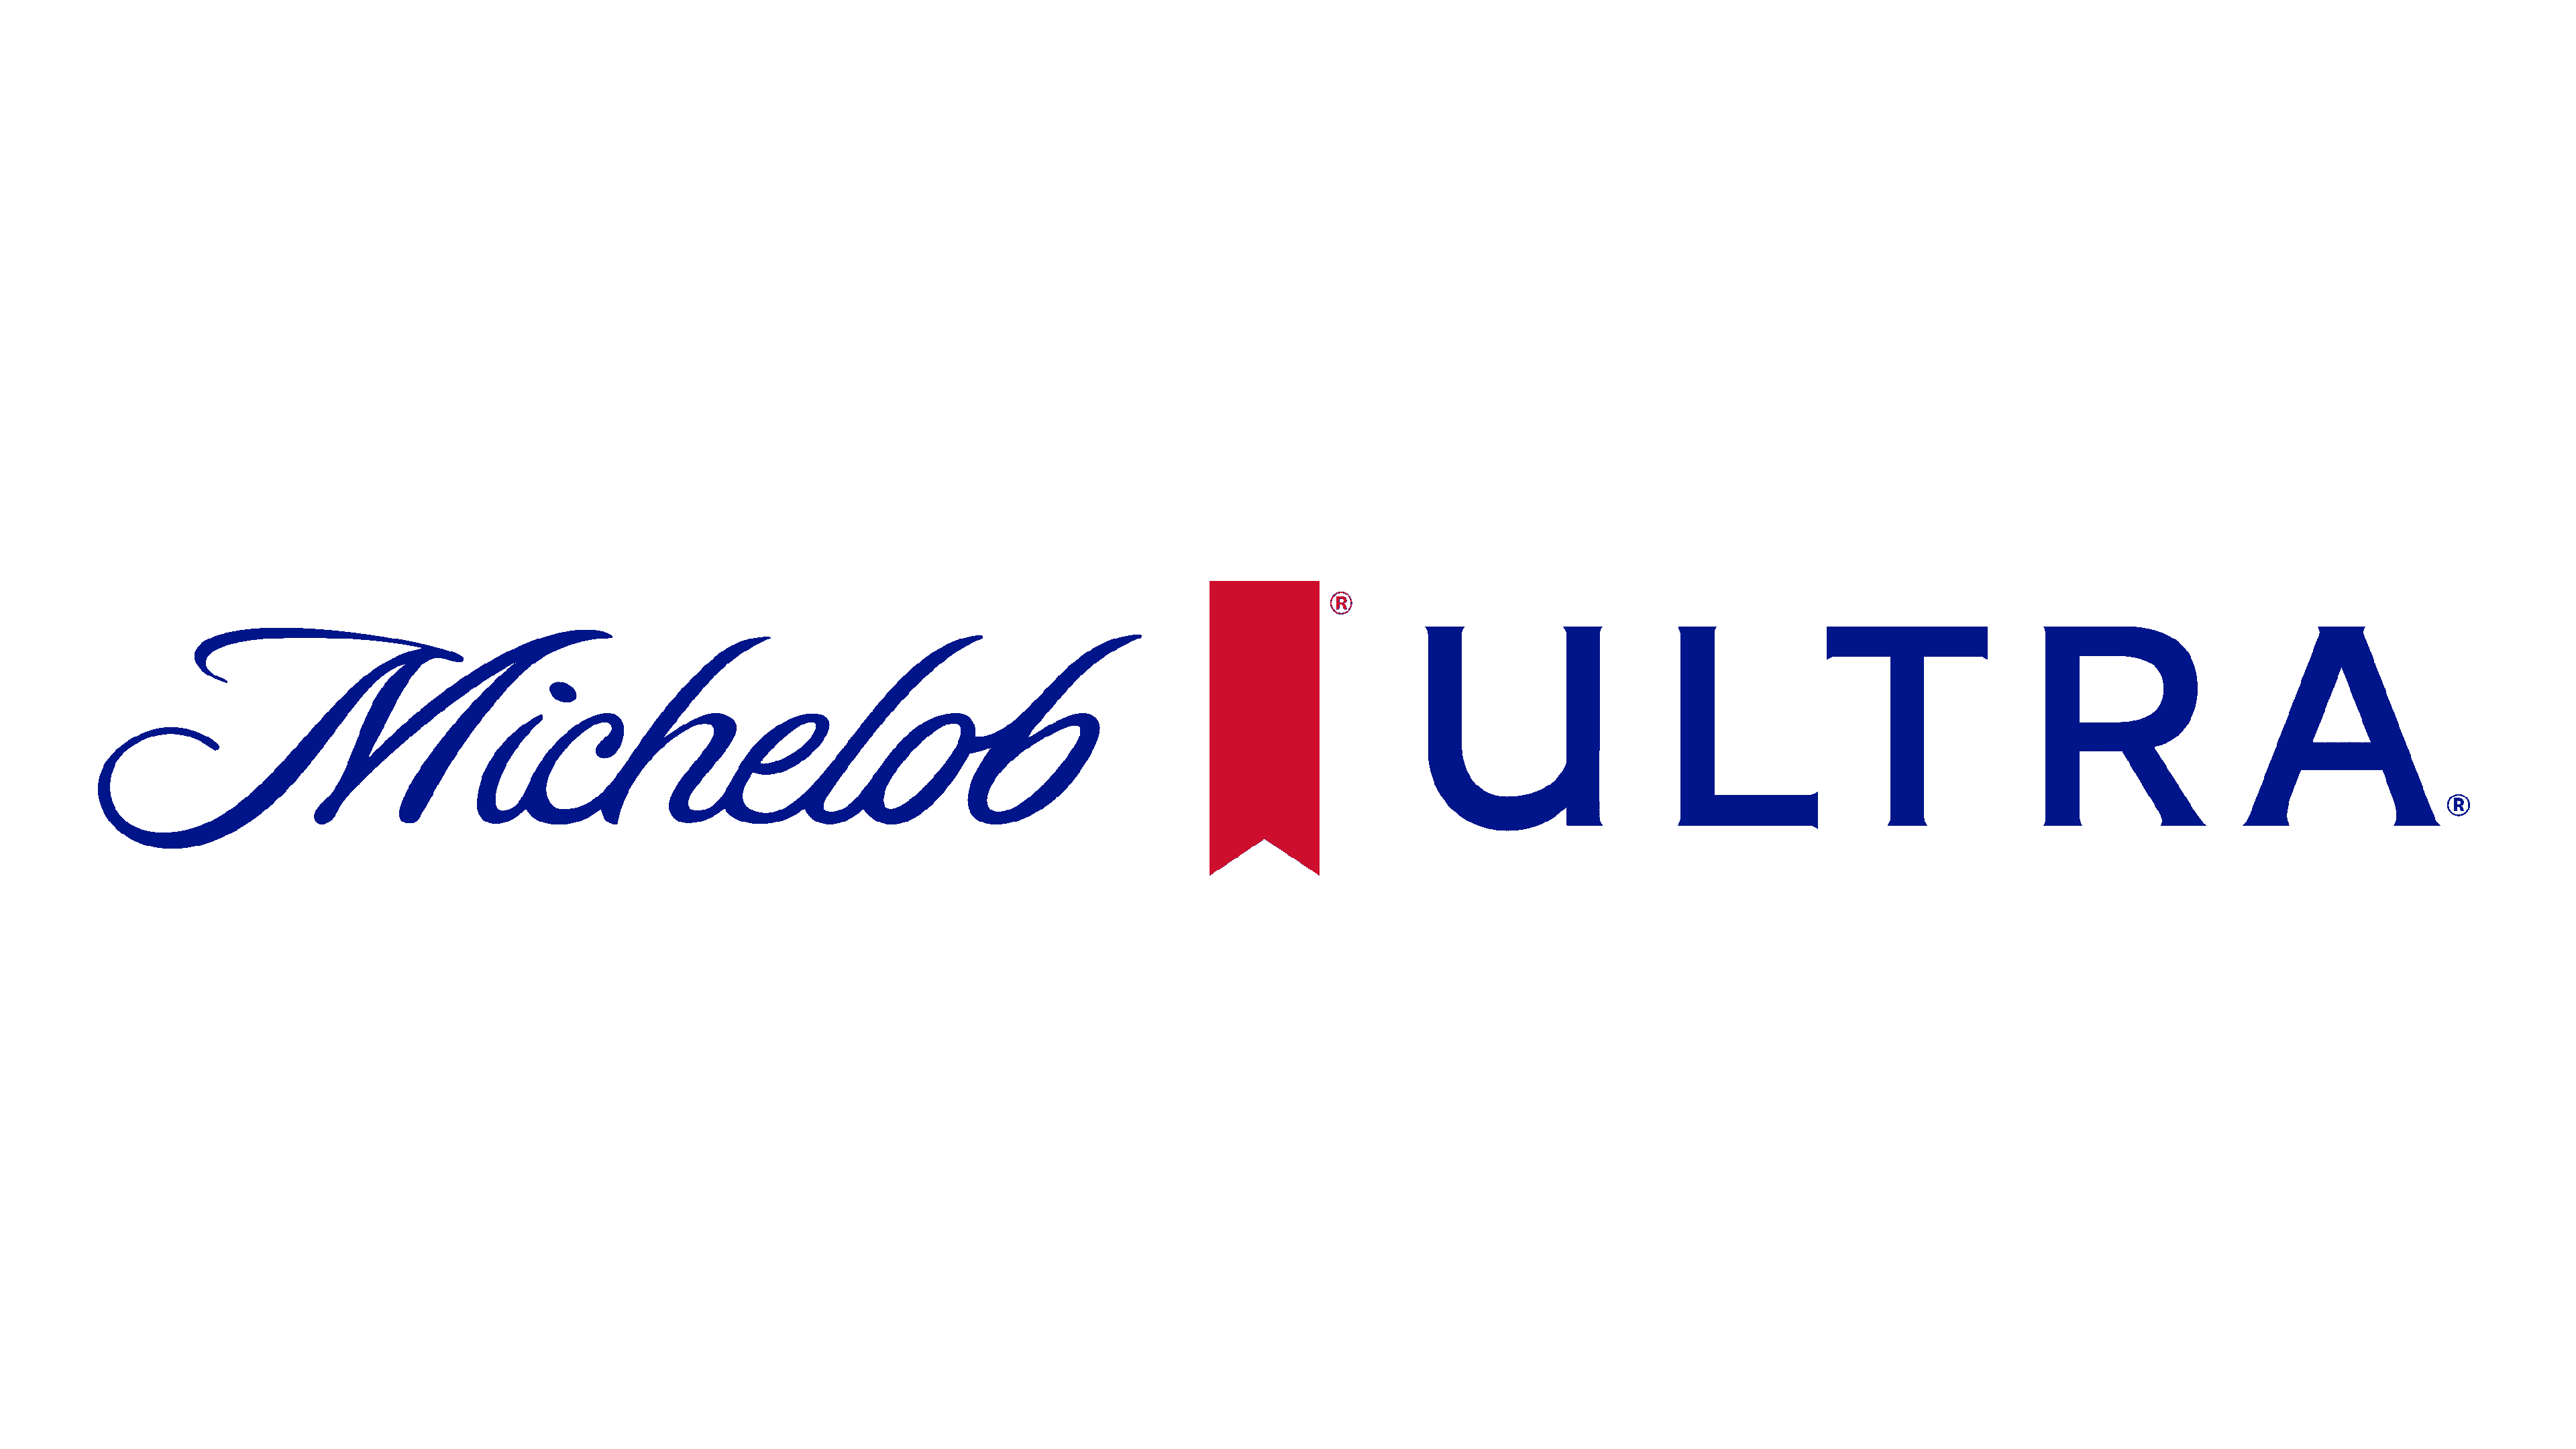 Brand Spotlight: Michelob ULTRA®